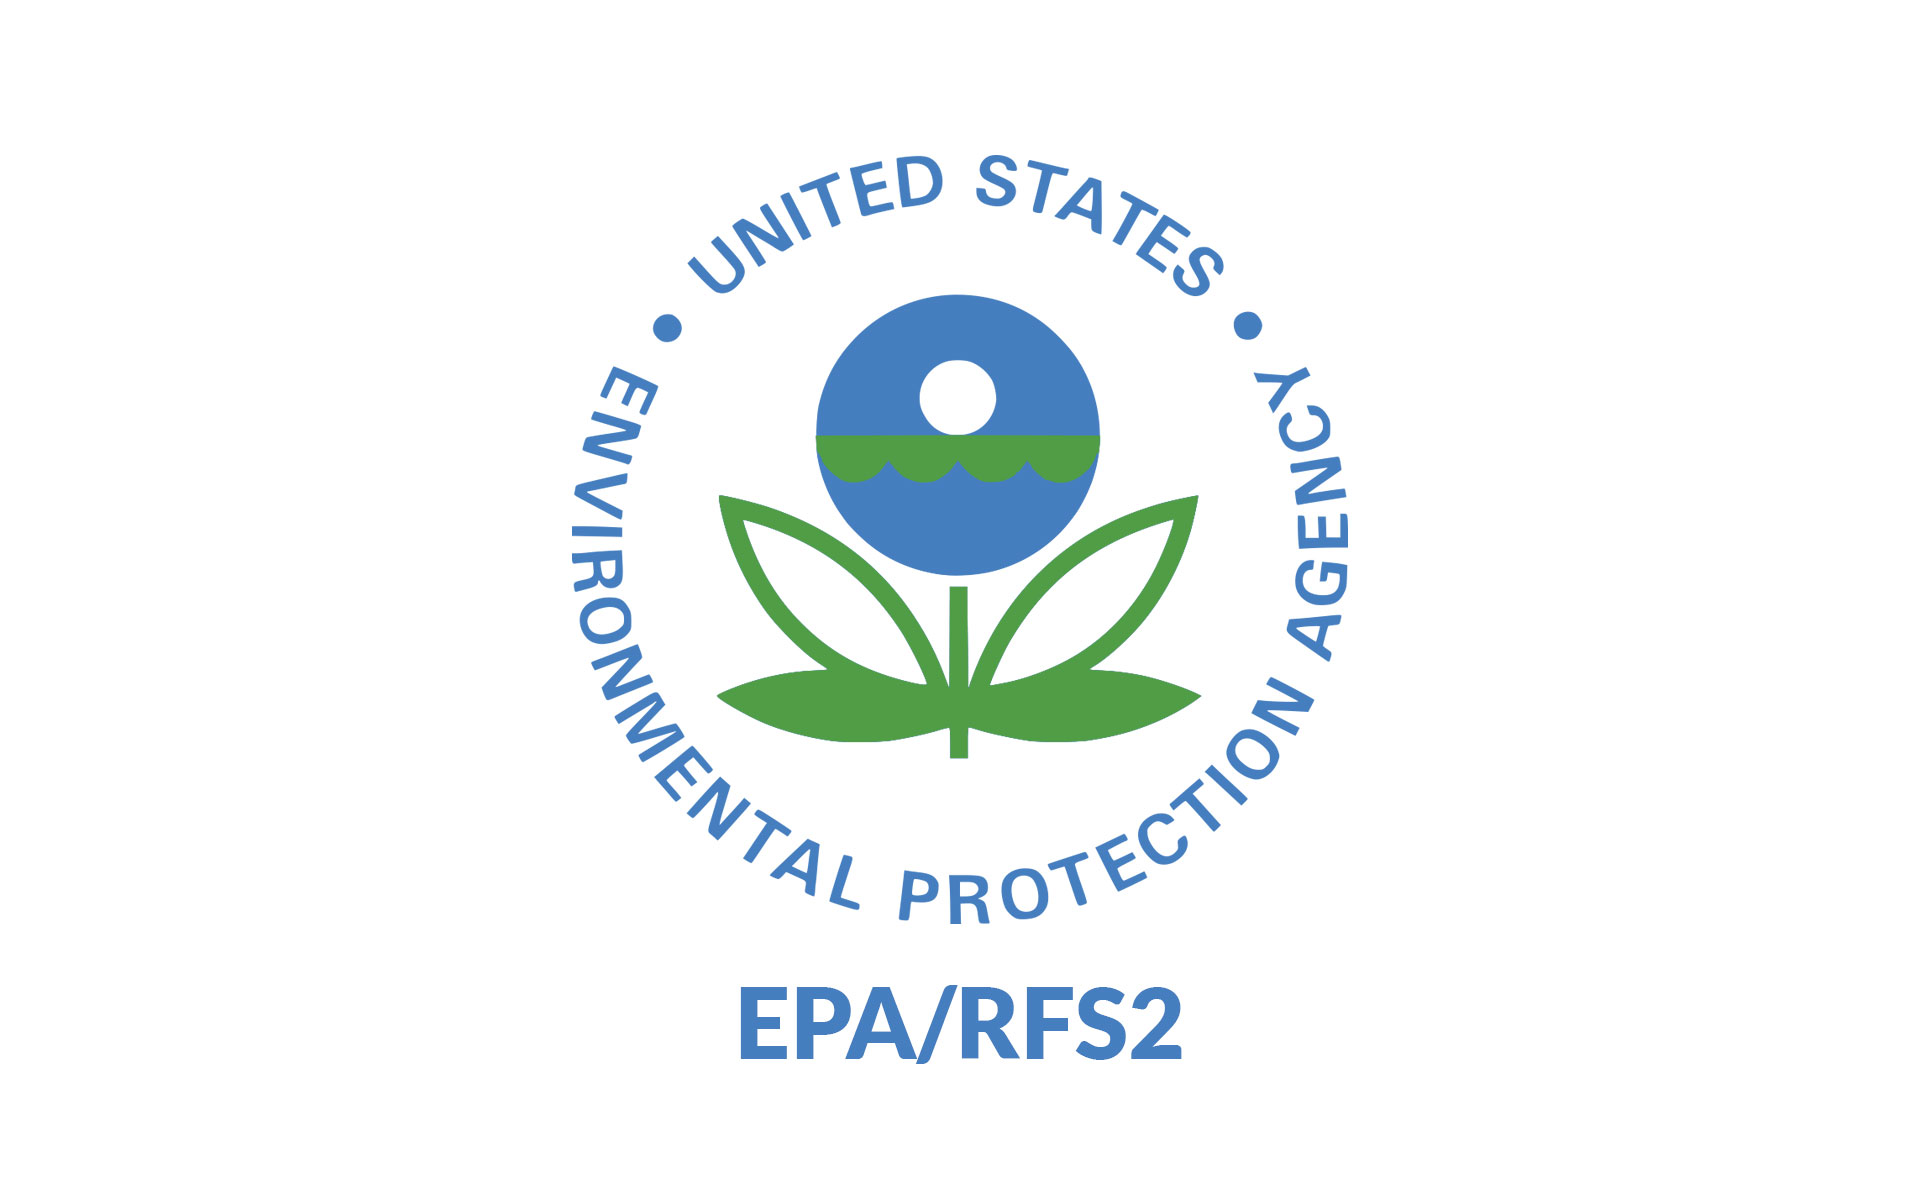 Certificação EPA RFS2 - United States - Environmental Protection Agency